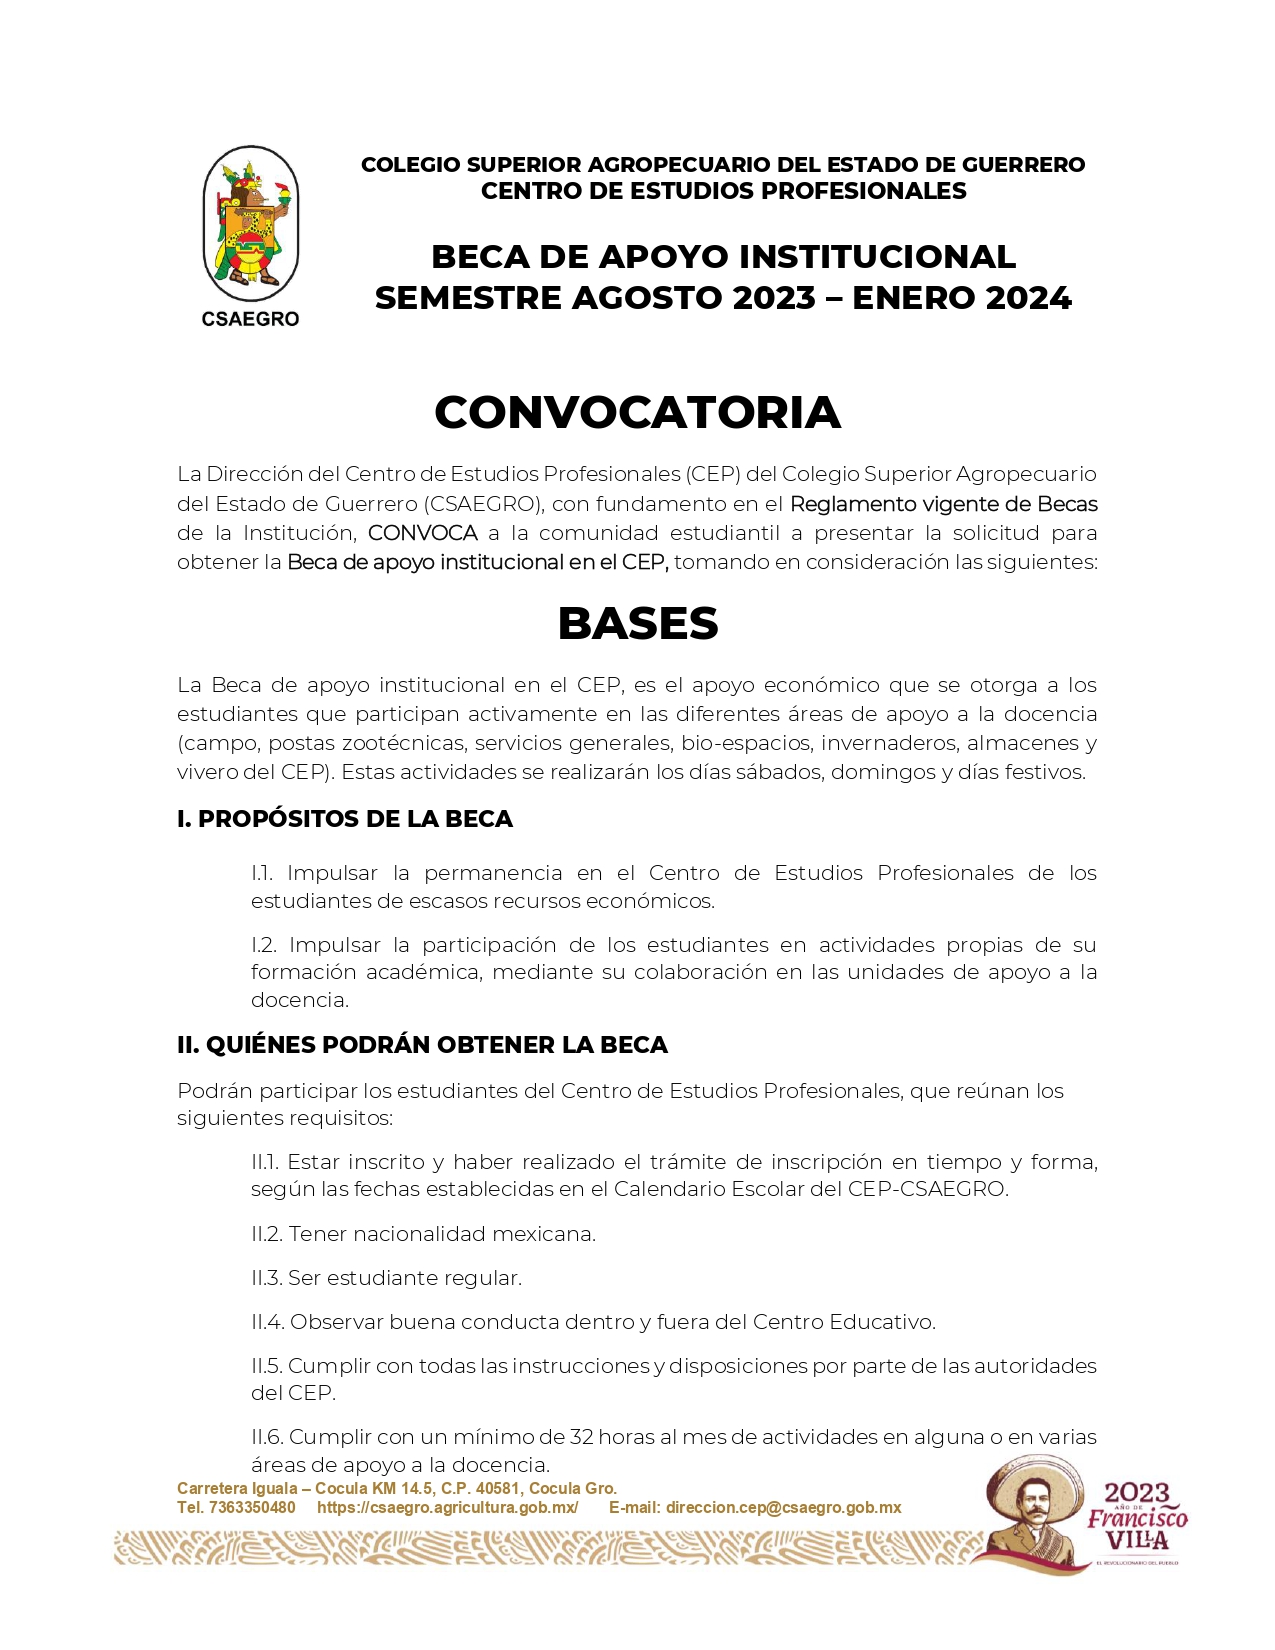 CONVOCATORIA BECA DE APOYO INSTITUCIONAL SEMESTRE AGOSTO 2023 - ENERO 2024_page-0001.jpg